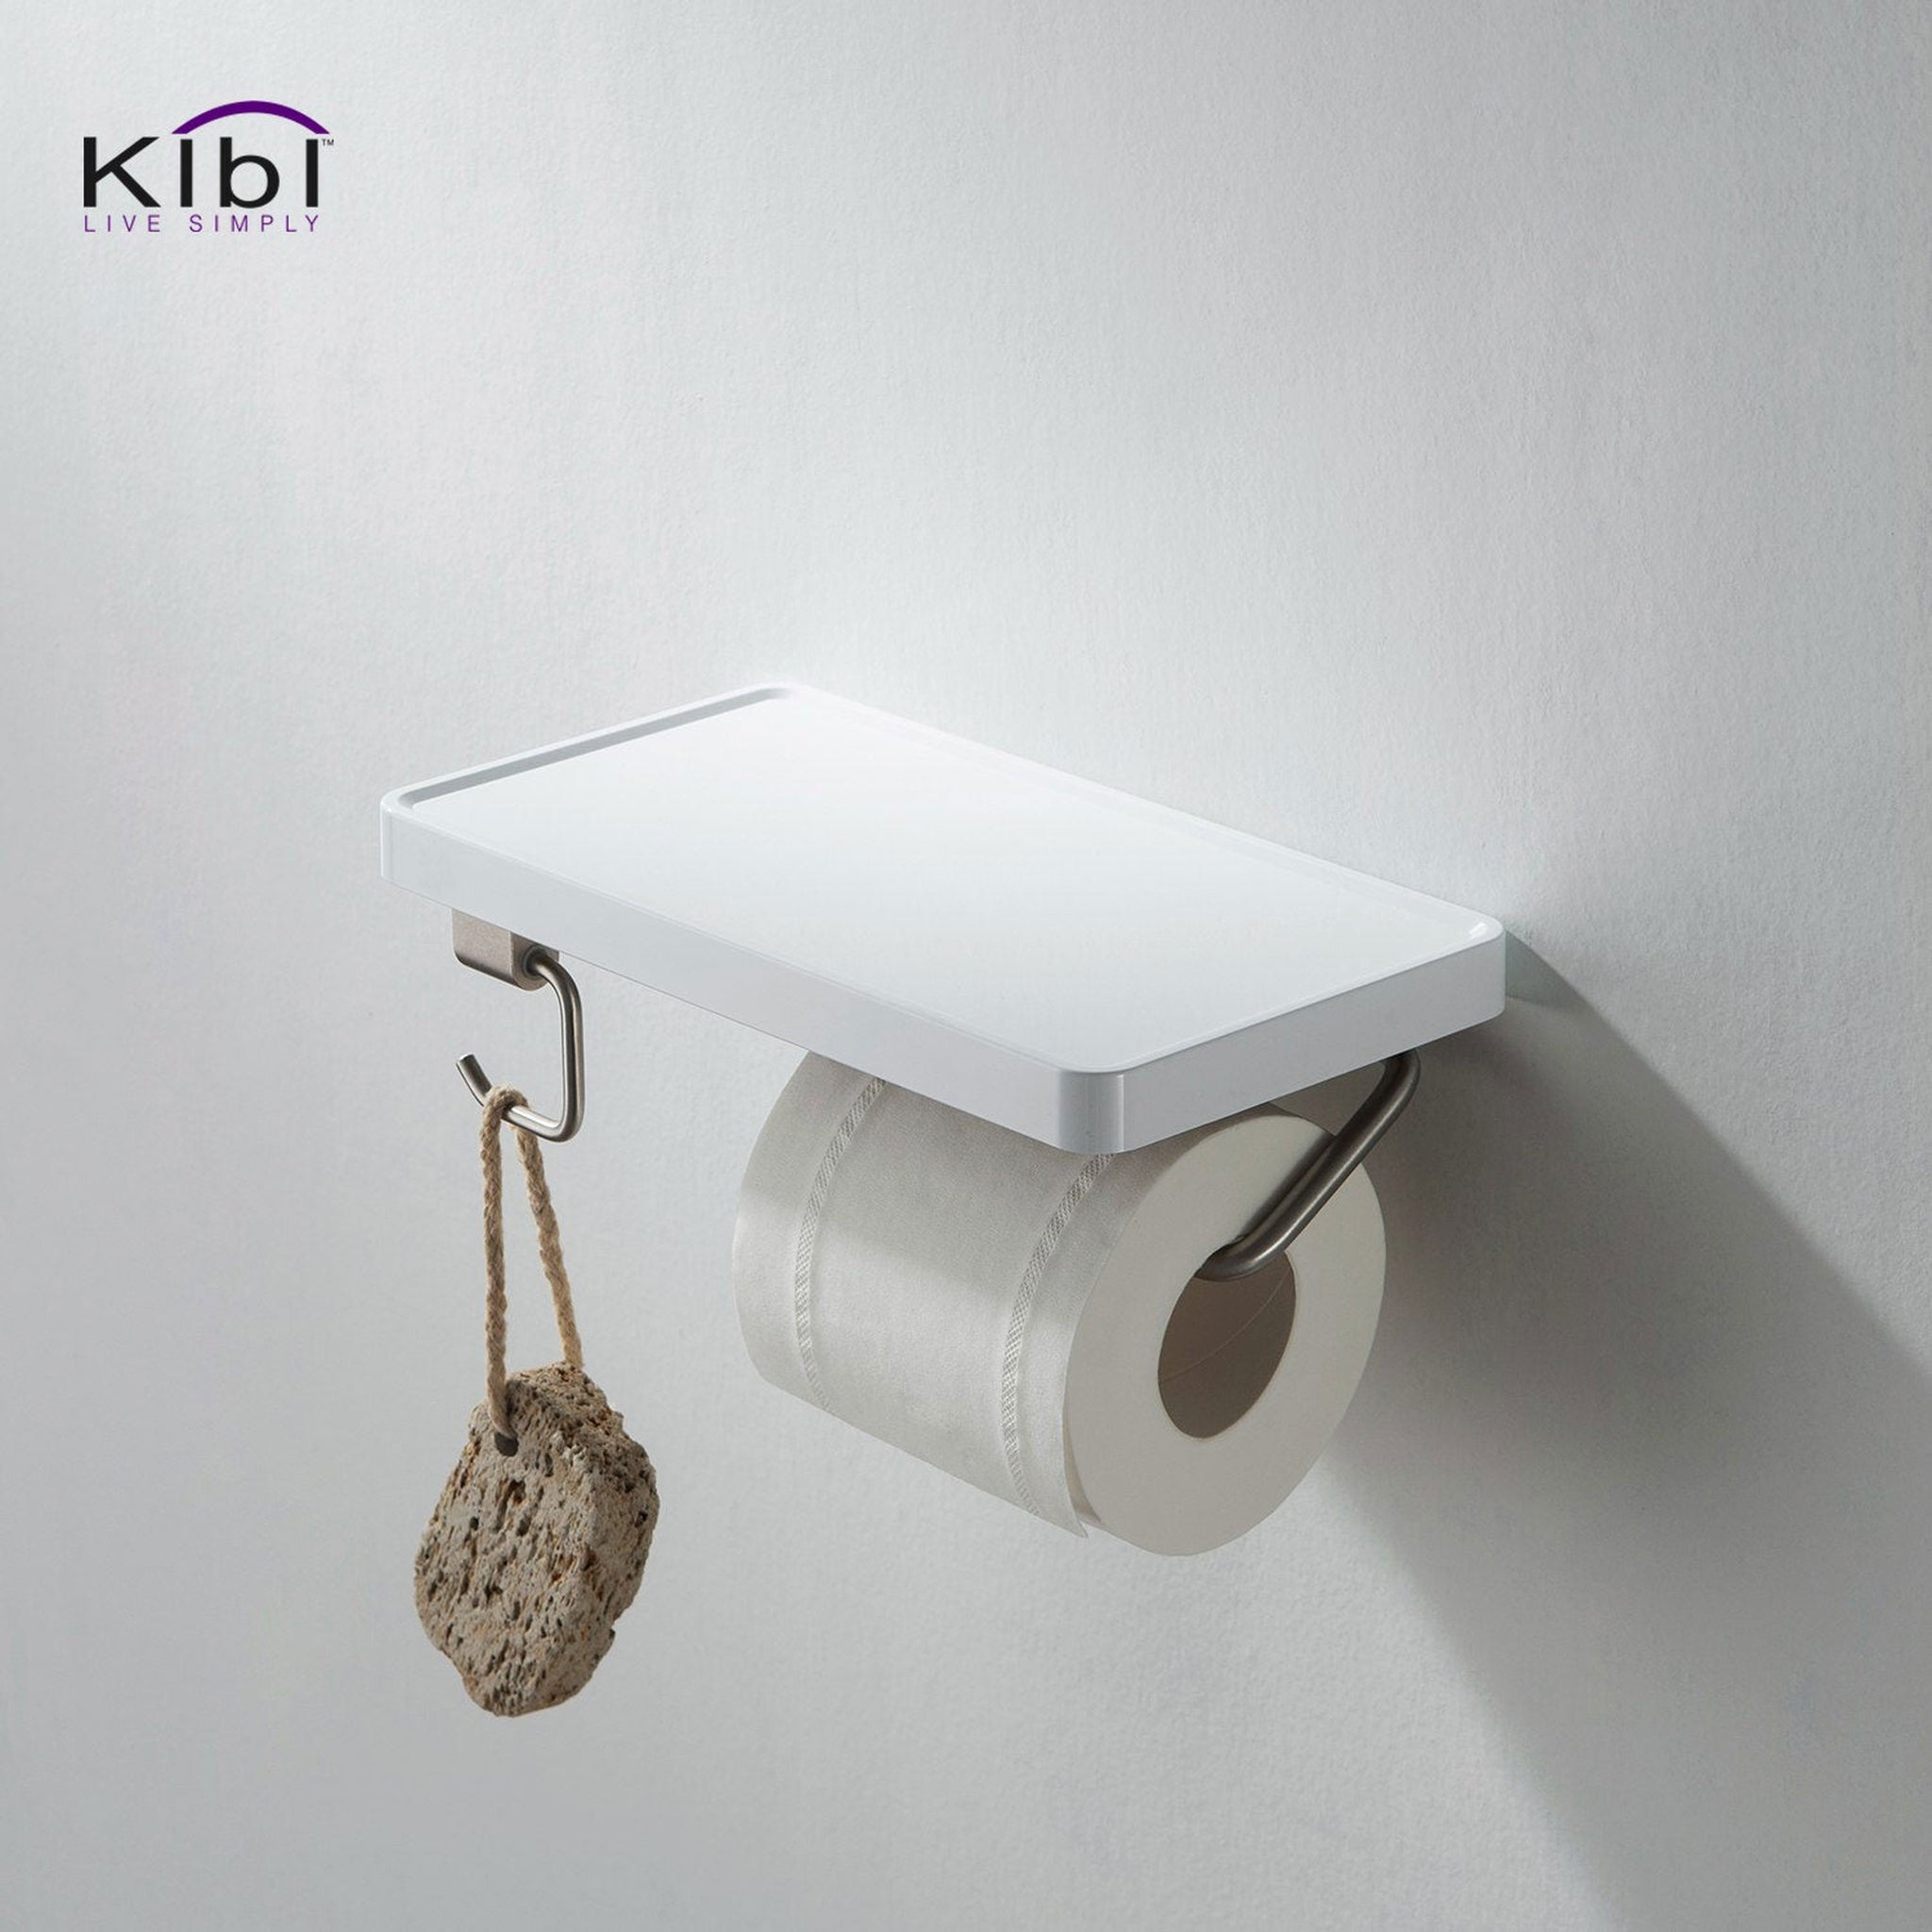 KIBI, KIBI Deco Bathroom Tissue Holder With Shelf and Hook in Brushed Nickel Finish